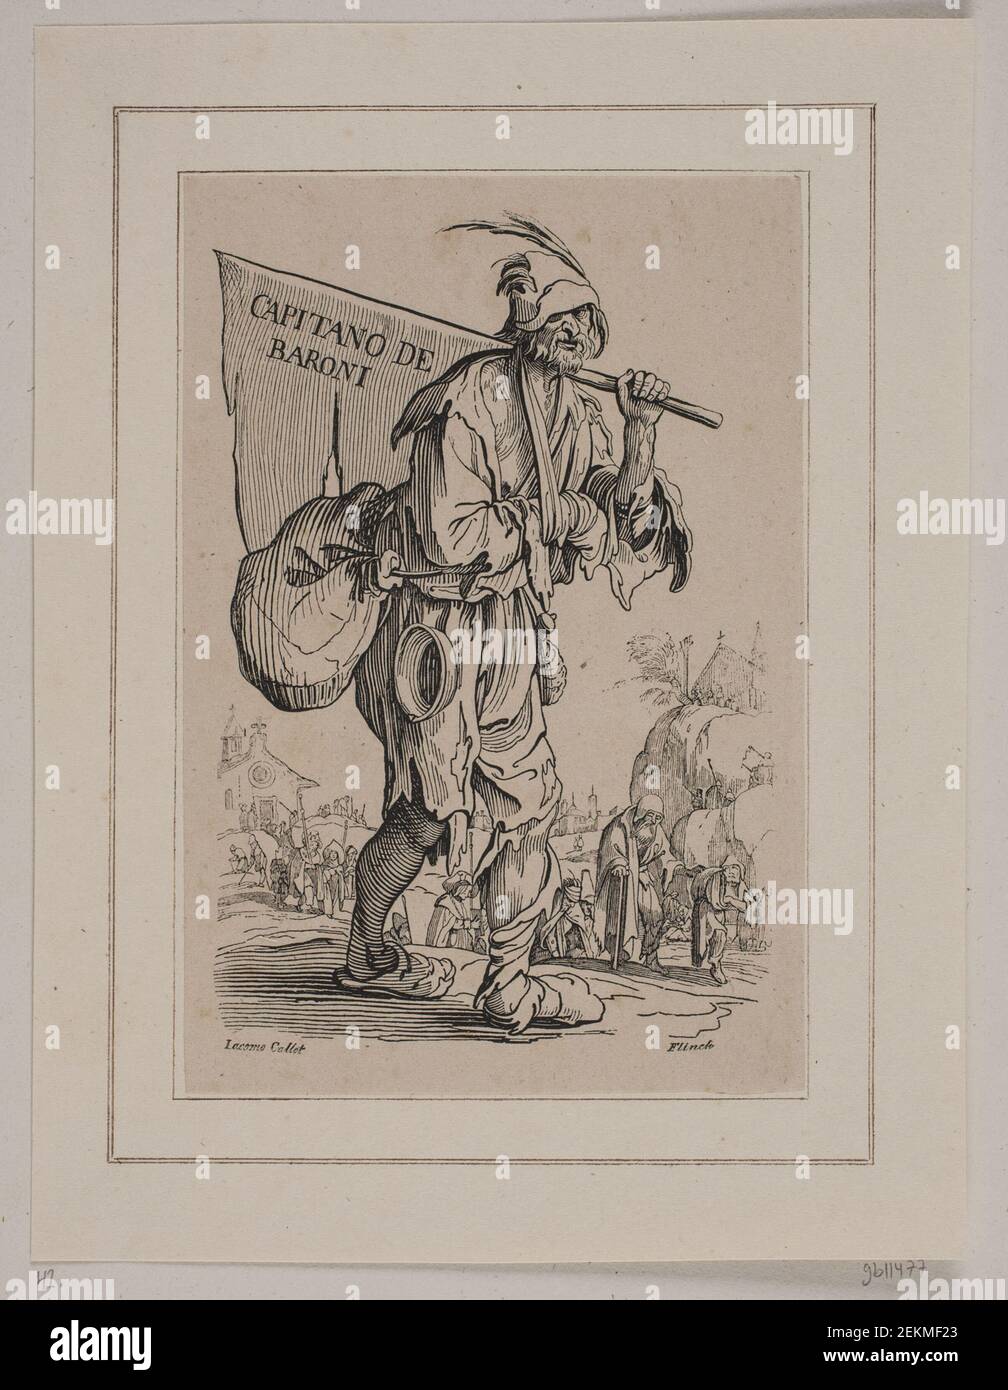 Andreas Flinch (1813-1872); Jacques Callot (1592-1635), Captain De Baroni, 1813 - 1872 Stock Photo